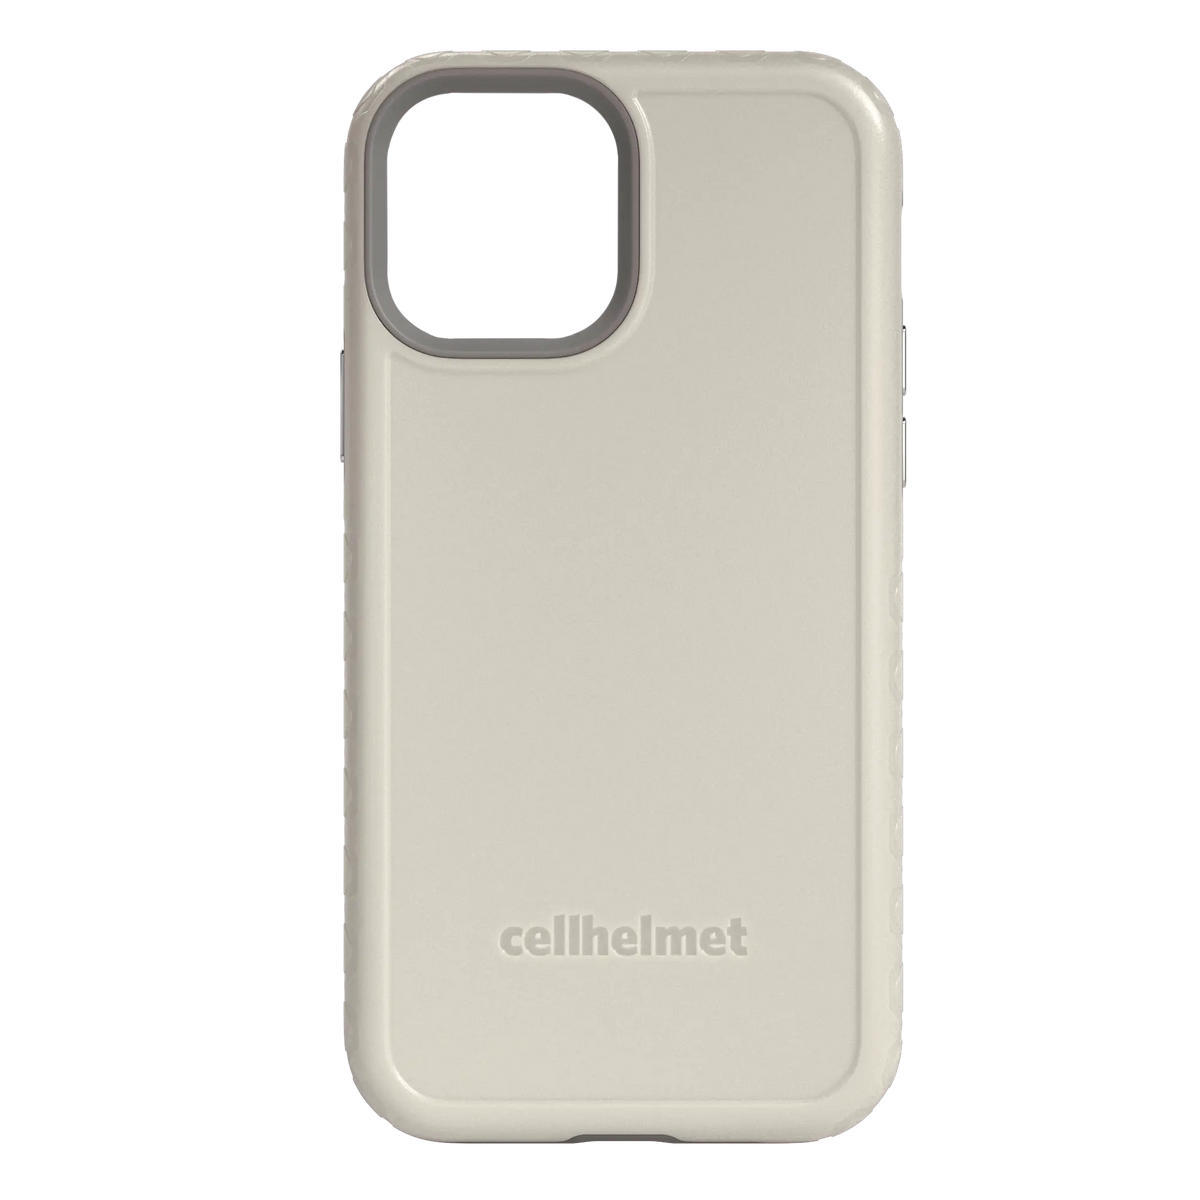 Gray cellhelmet Customizable Case for iPhone 12 Pro